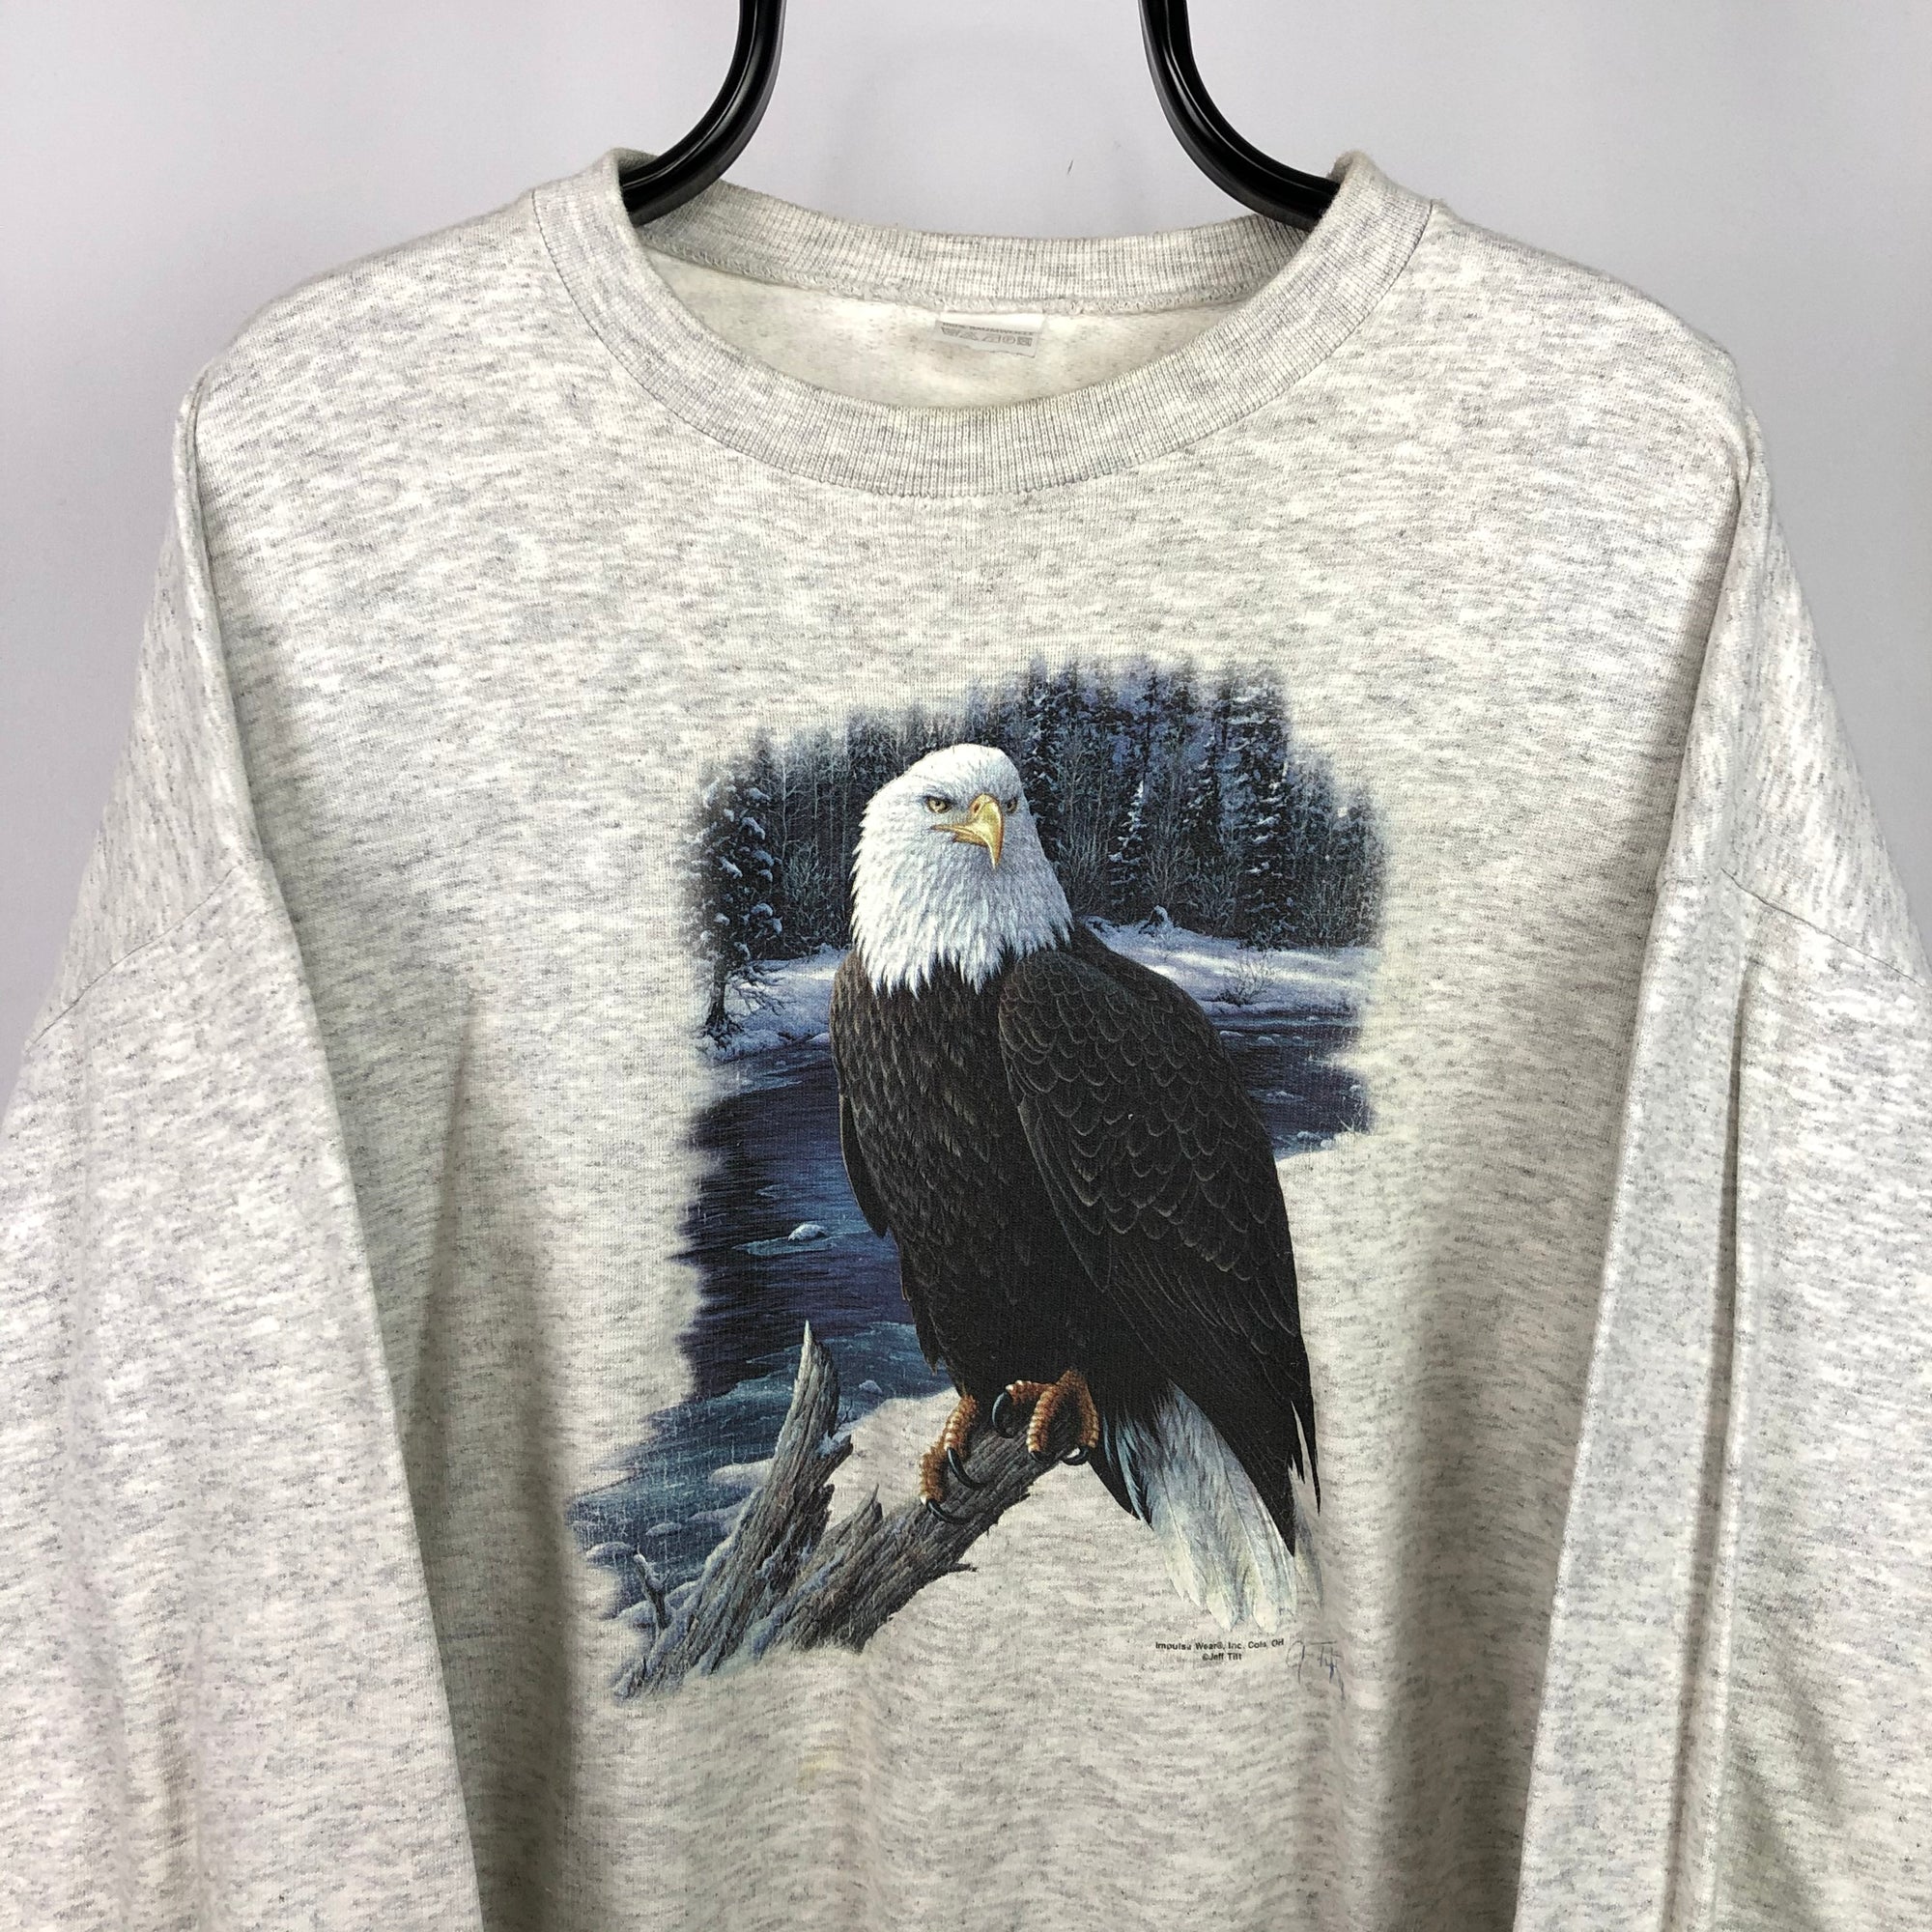 Vintage 90s Eagle Print Sweatshirt in Grey - Men's Medium/Women's Large